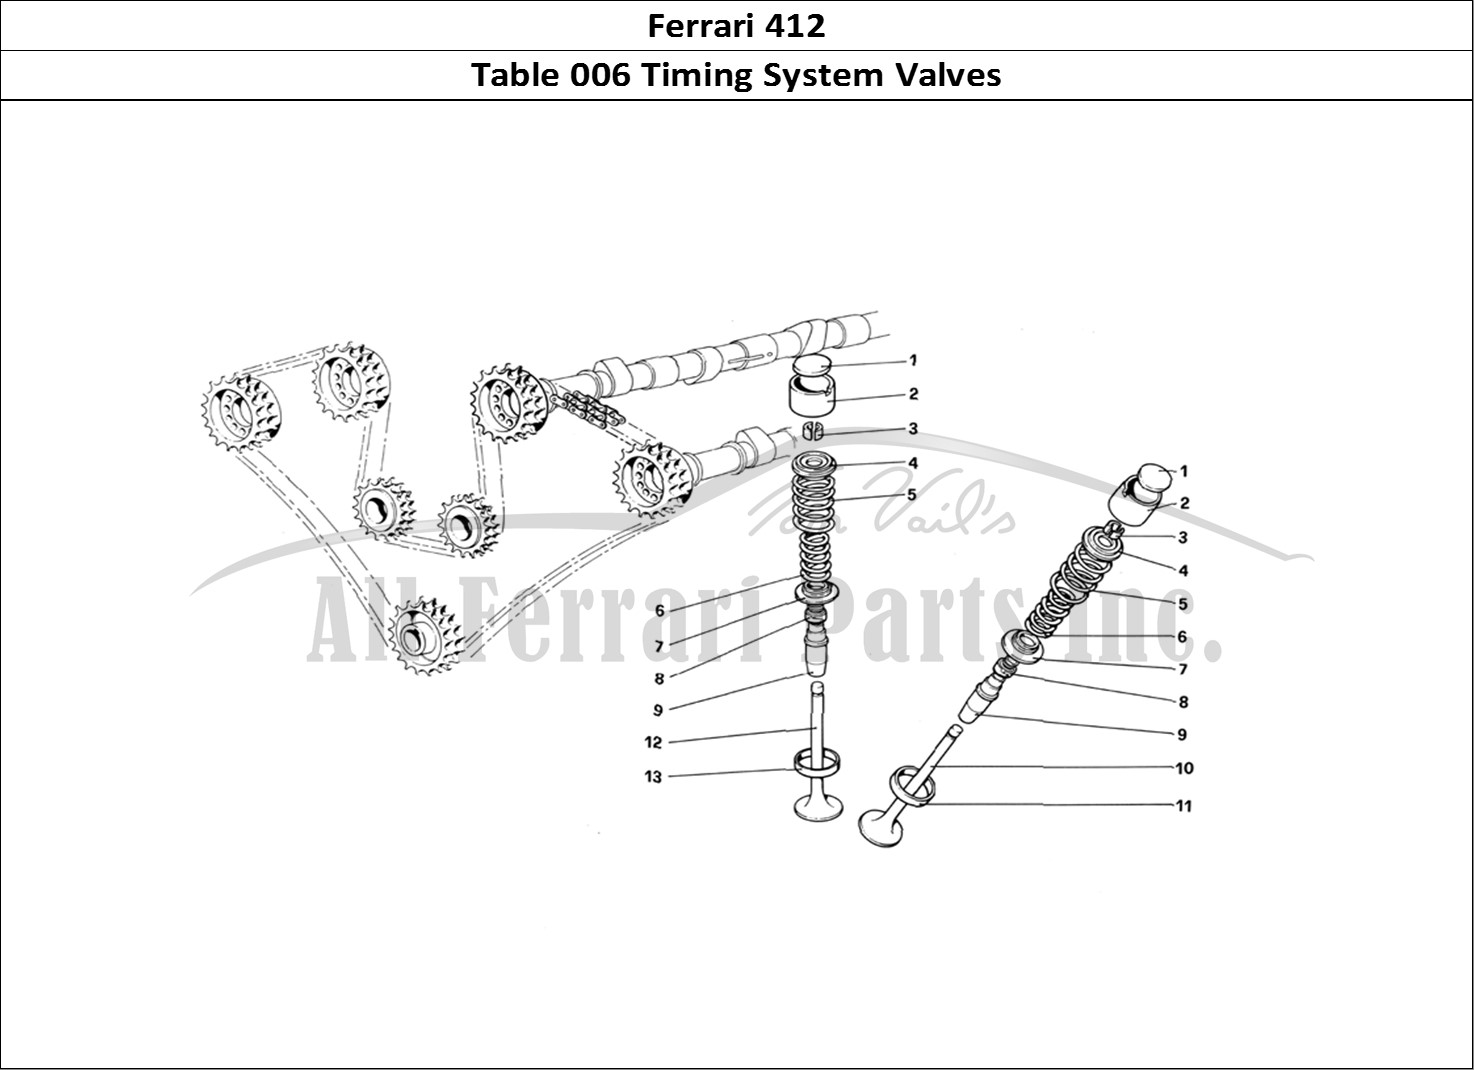 Ferrari Parts Ferrari 412 (Mechanical) Page 006 Timing System - Valves